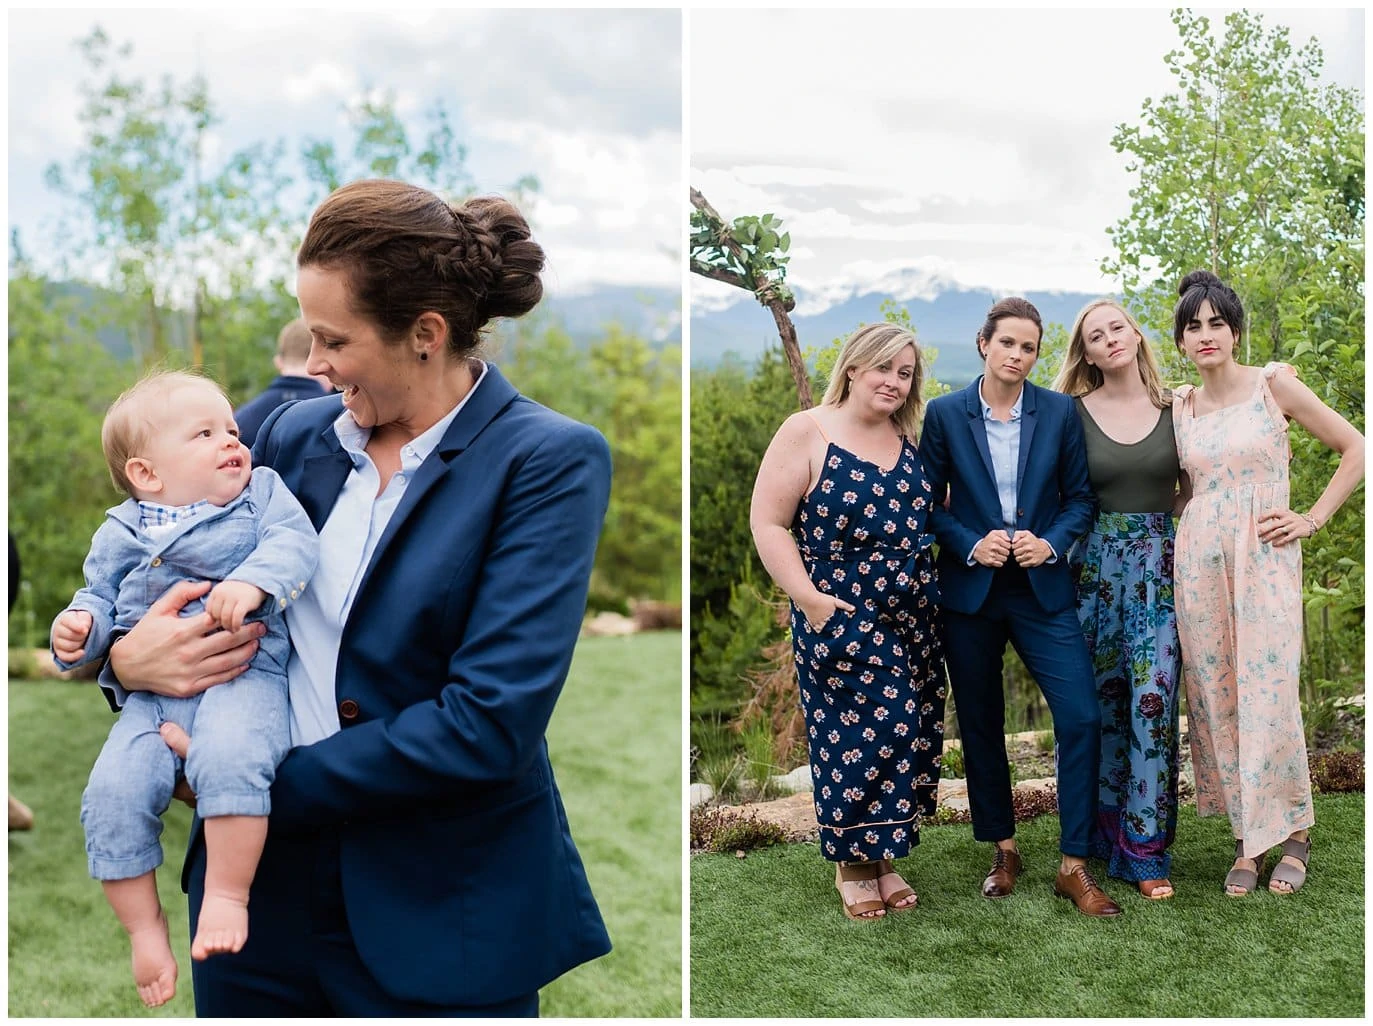 friend groups at Colorado wedding photo